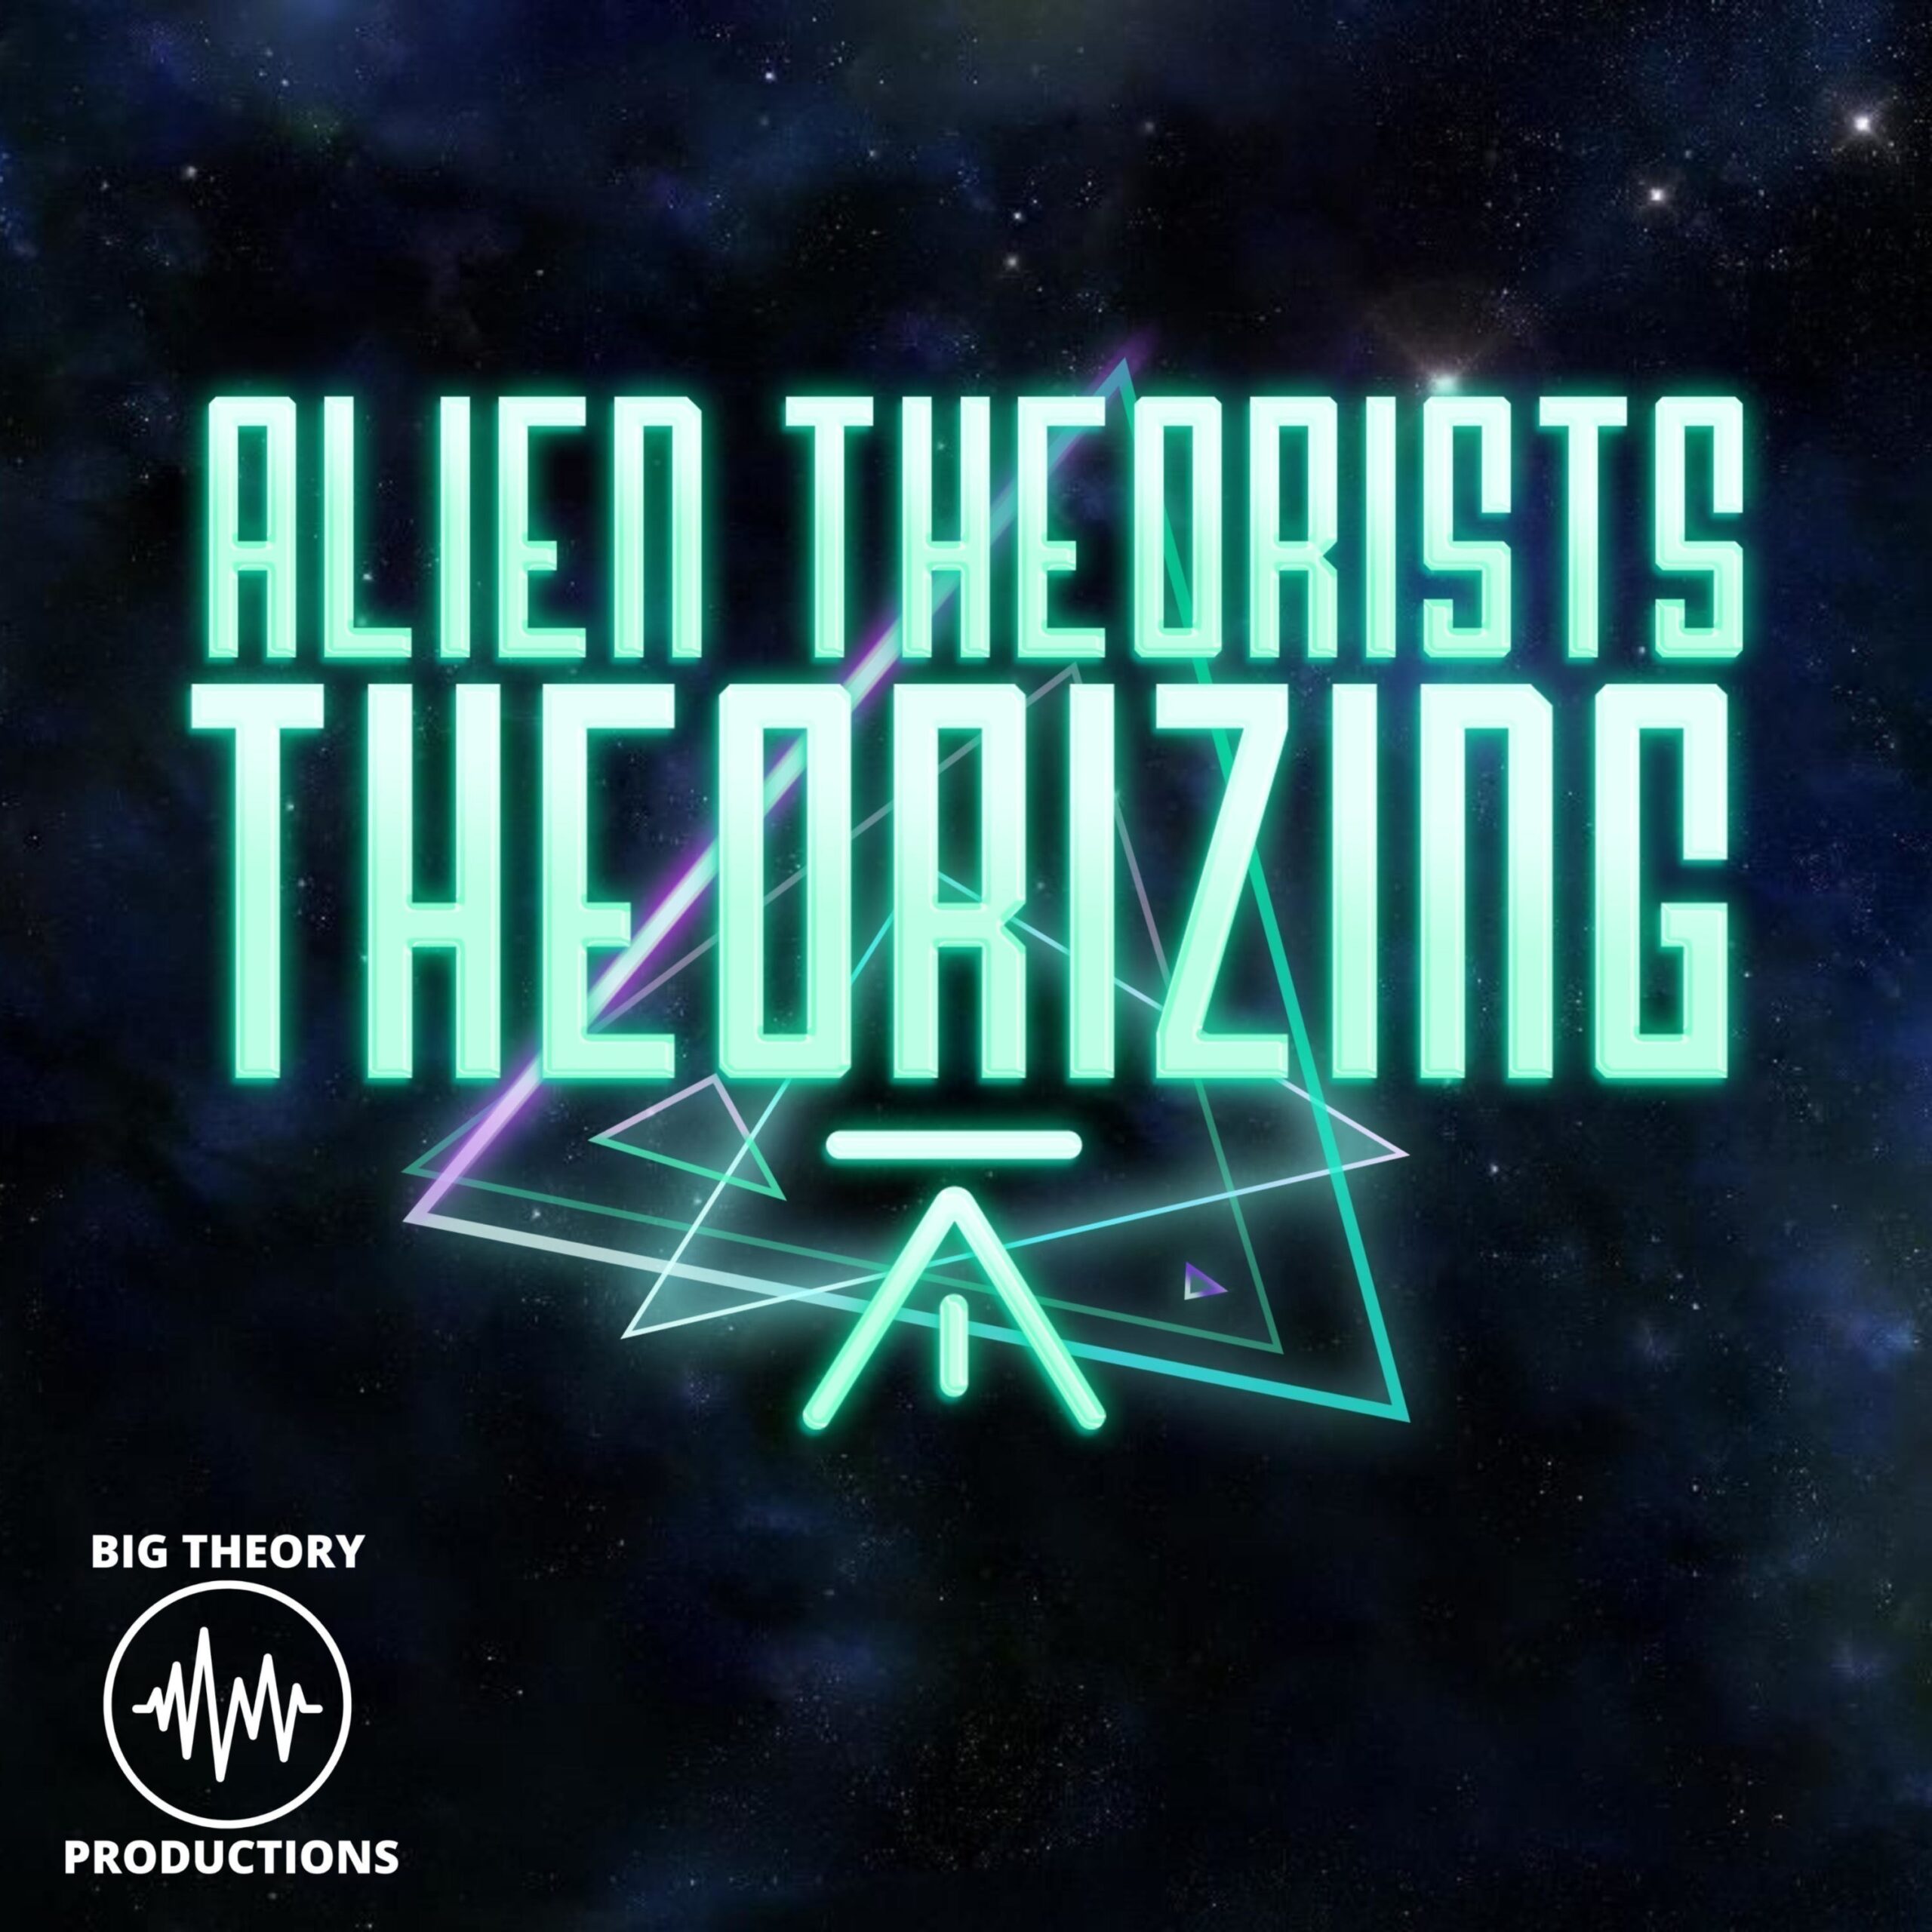 Alien Theorists Theorizing